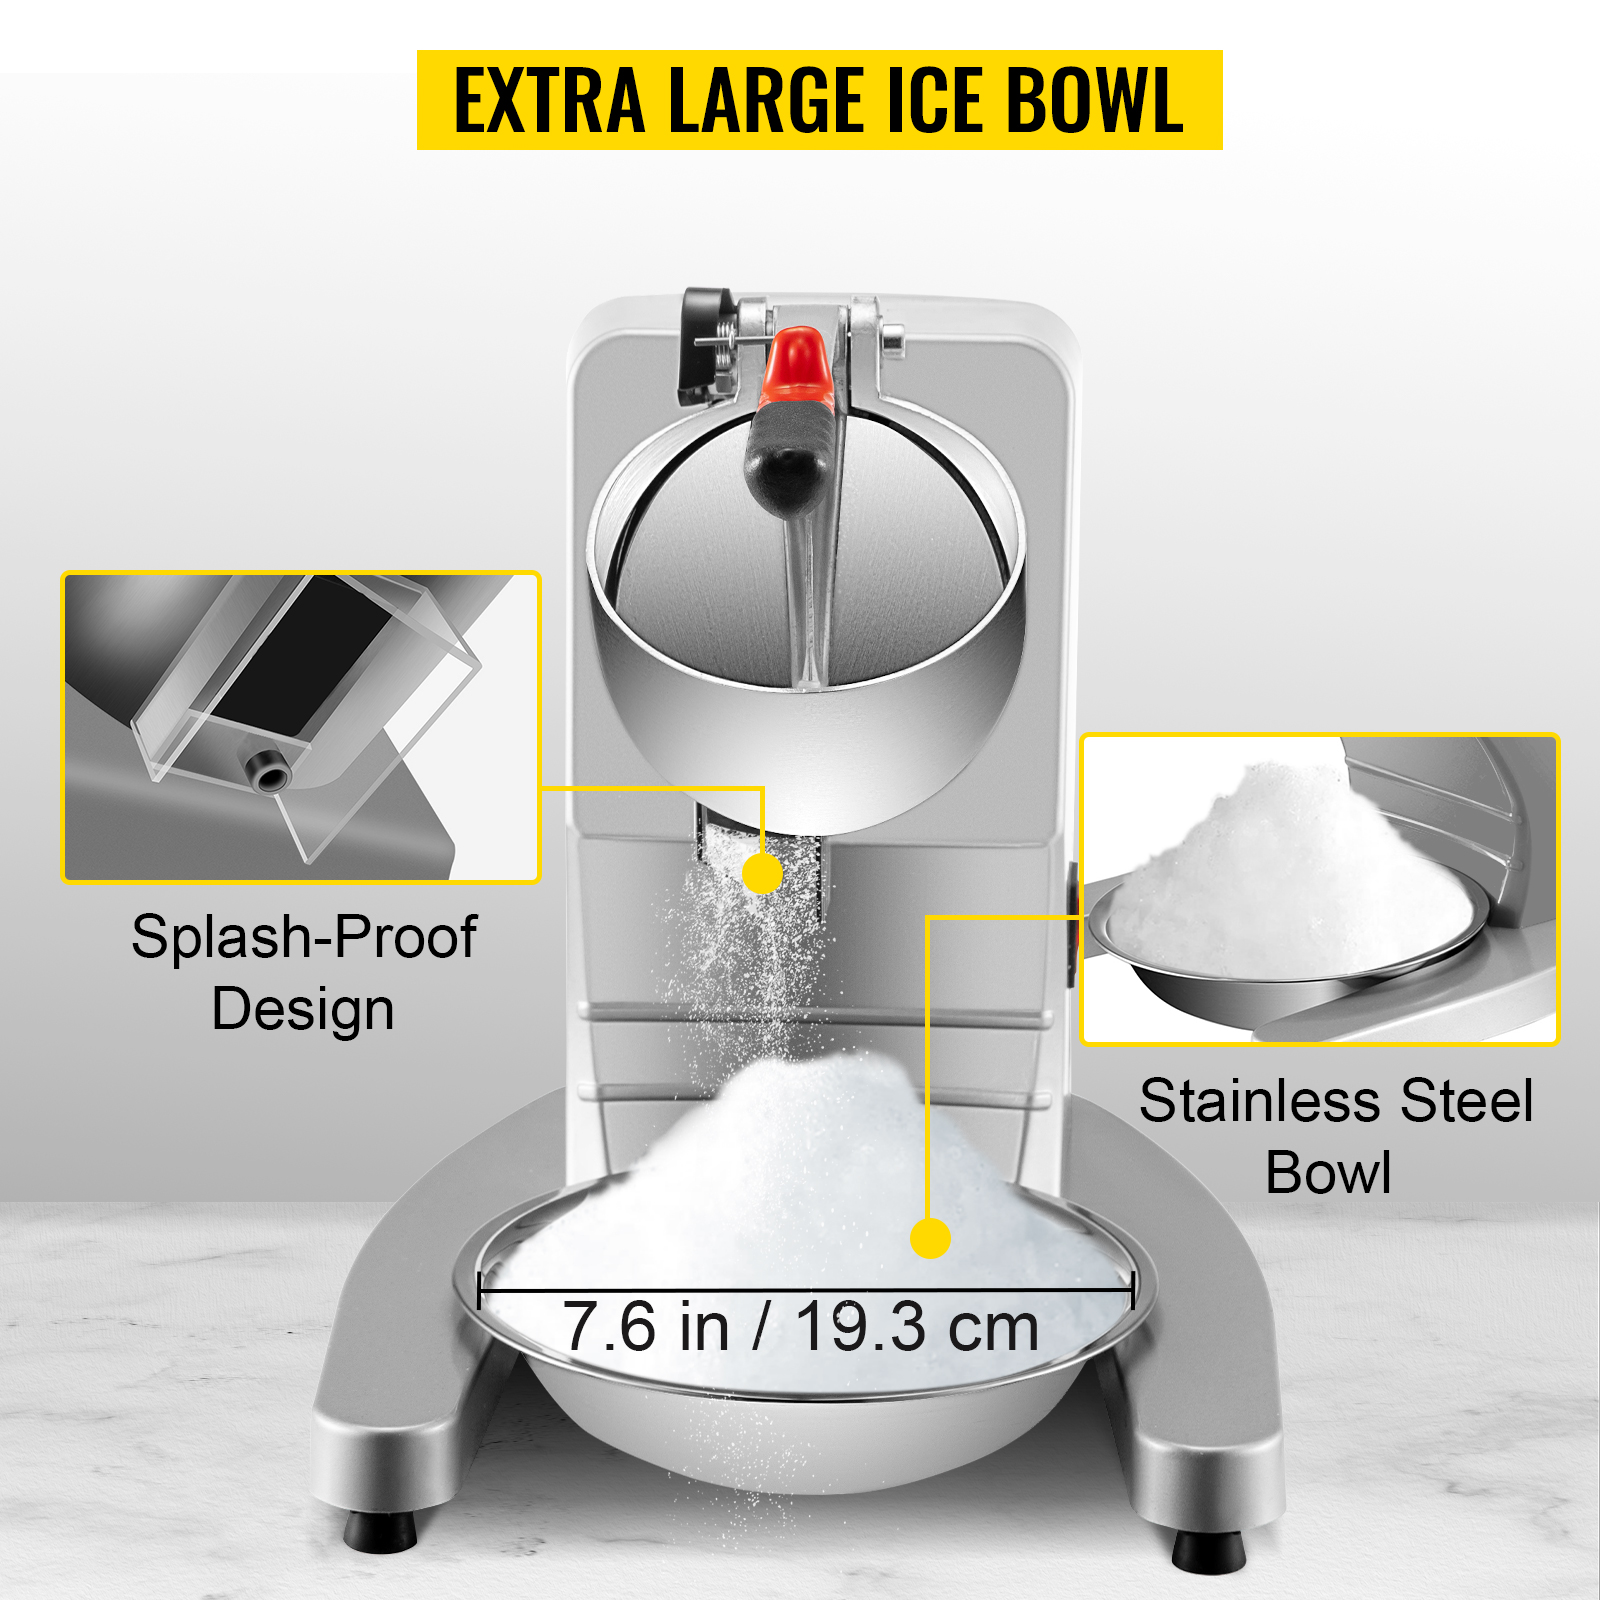 Broyeur à glace - machine à glace pilée - transparent - Conforama